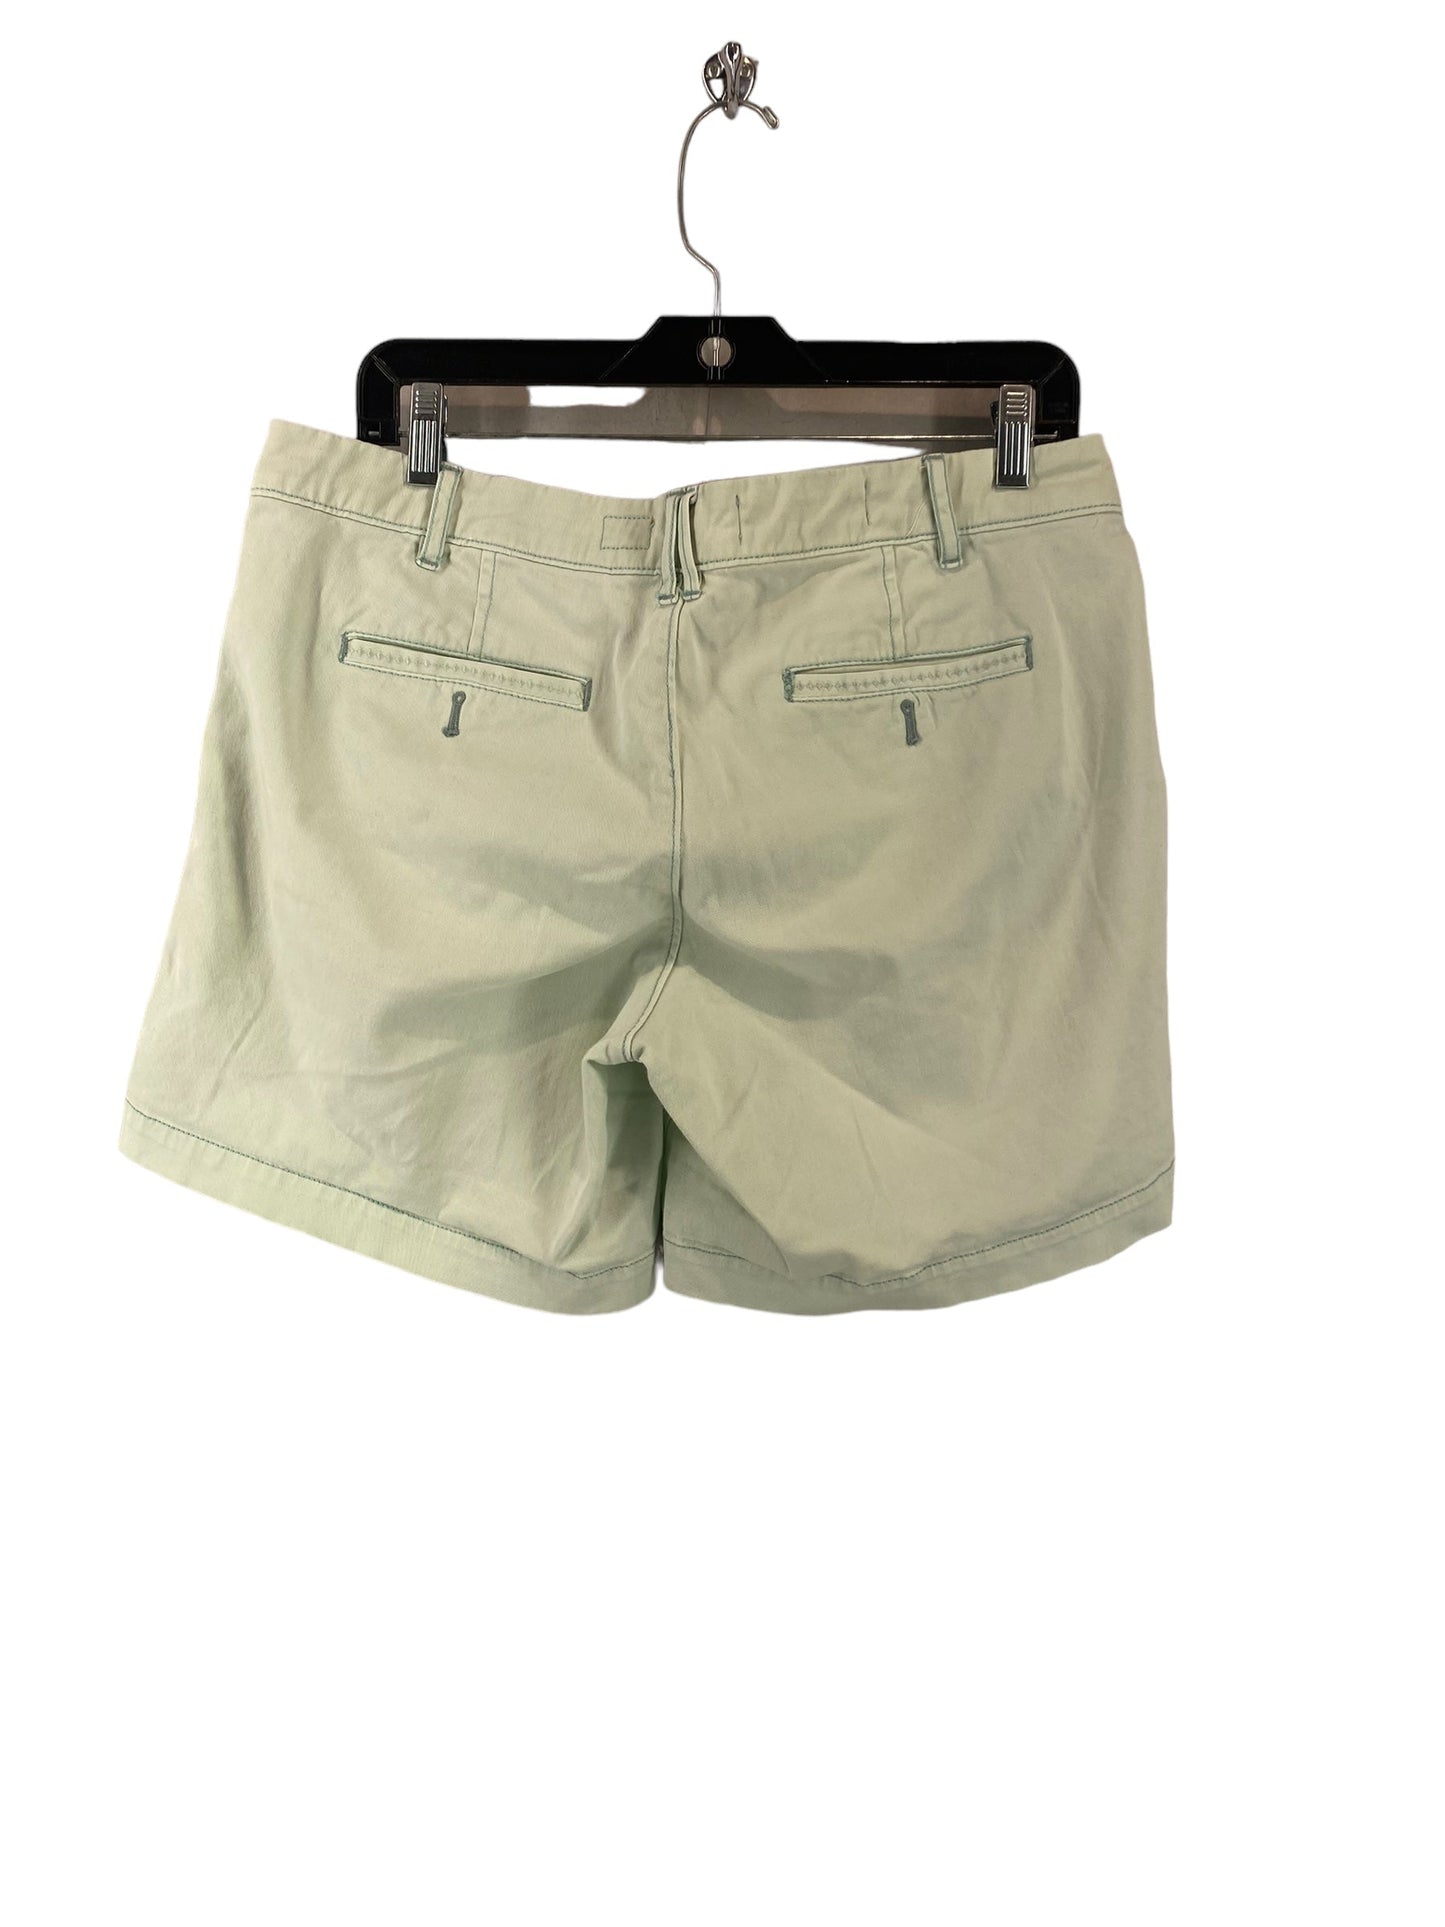 Green Shorts Pilcro, Size 29